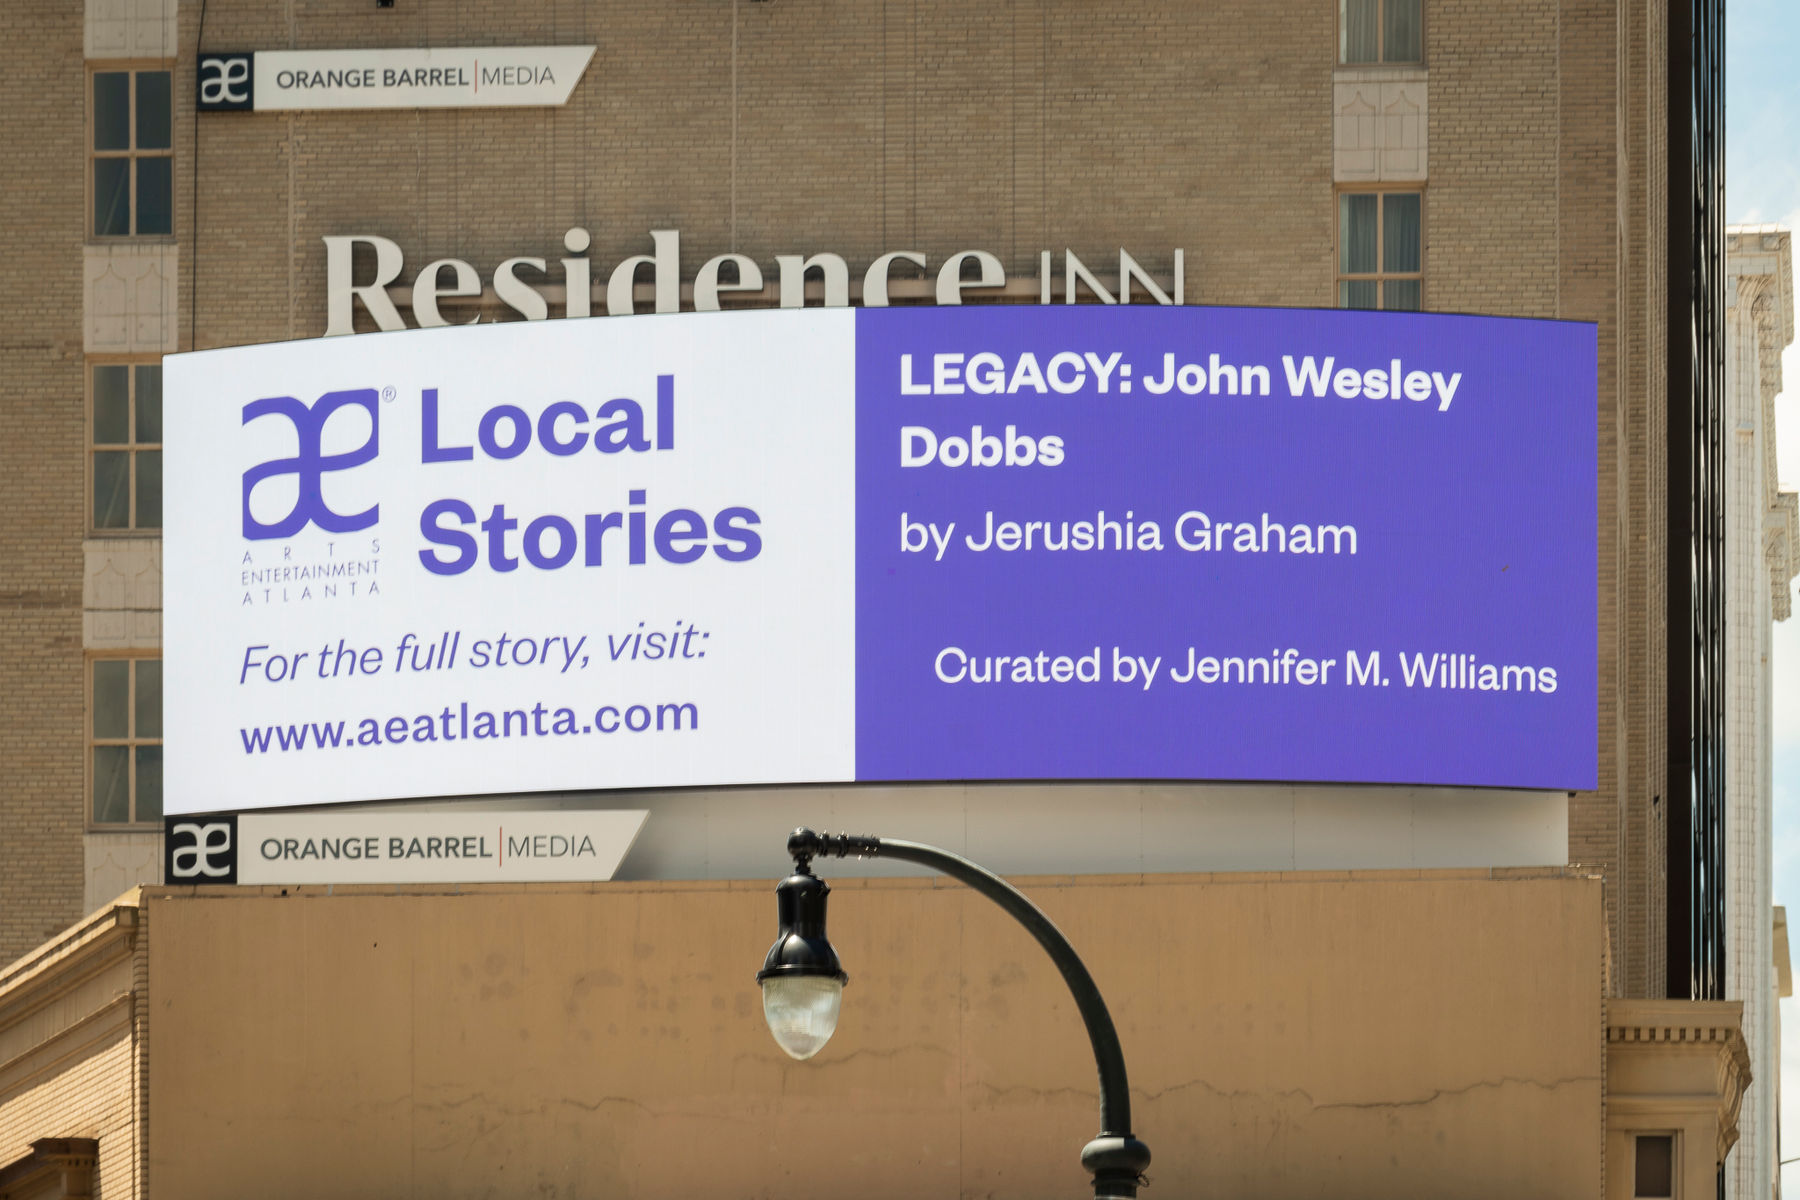 LEGACY: John Wesley Dobbs